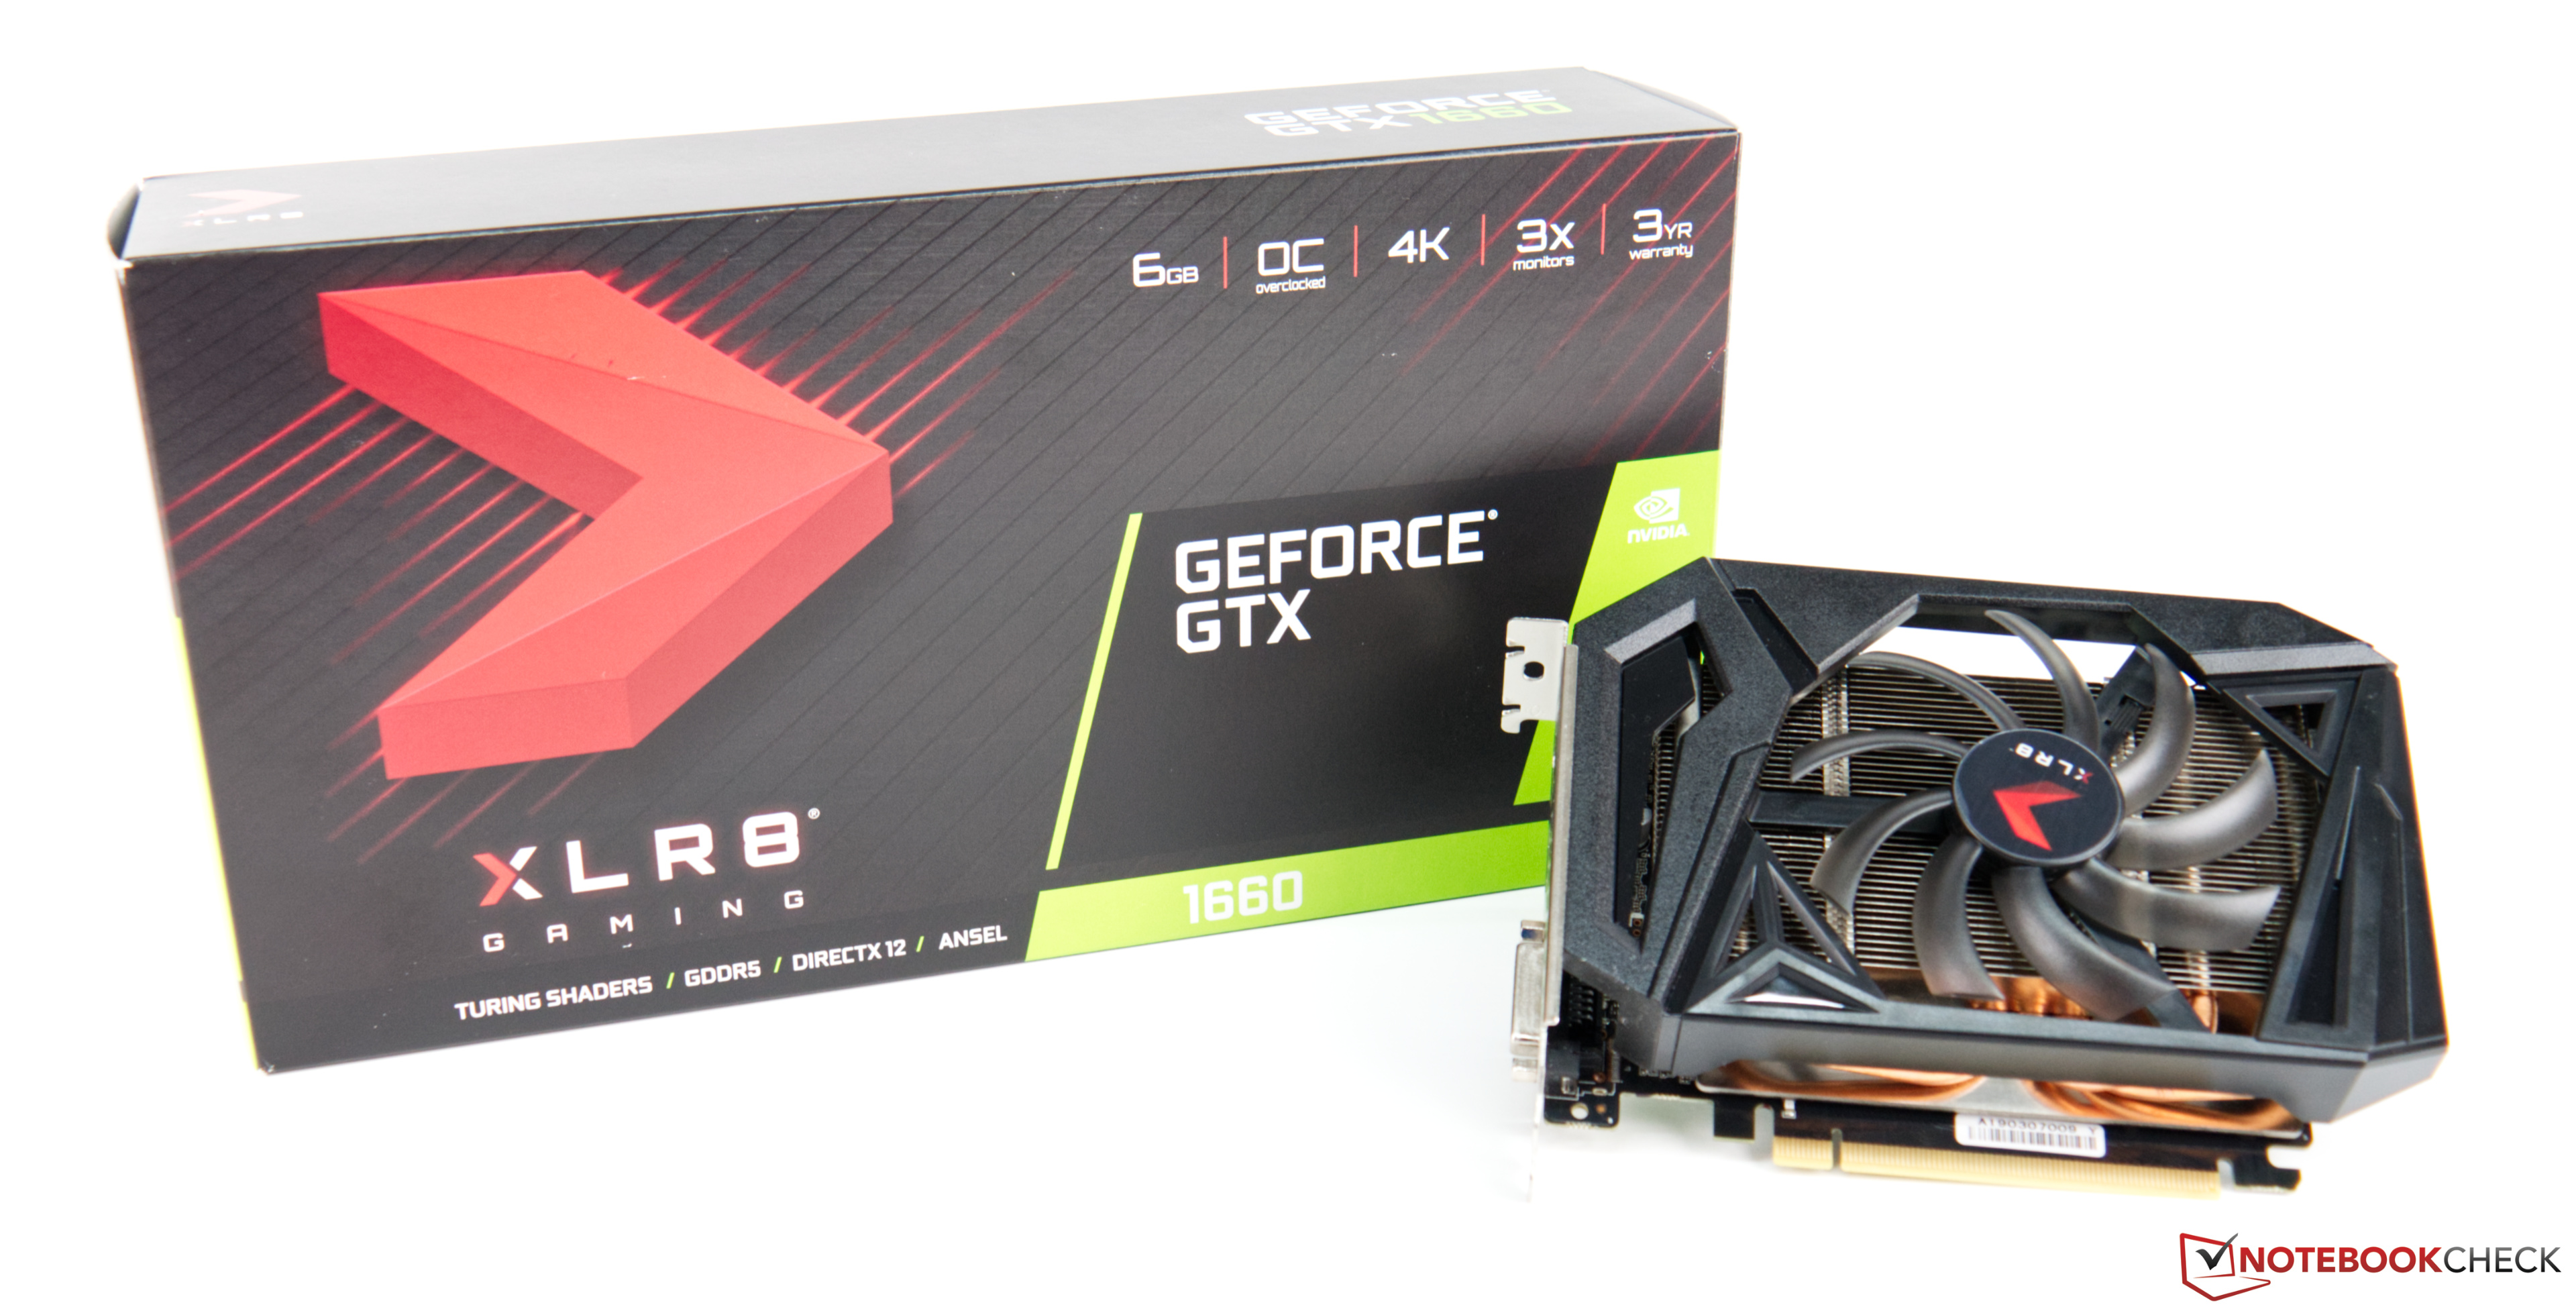 PNY GeForce GTX XLR8 Gaming OC: A compact GPU small form factor PCs caveats - NotebookCheck.net News